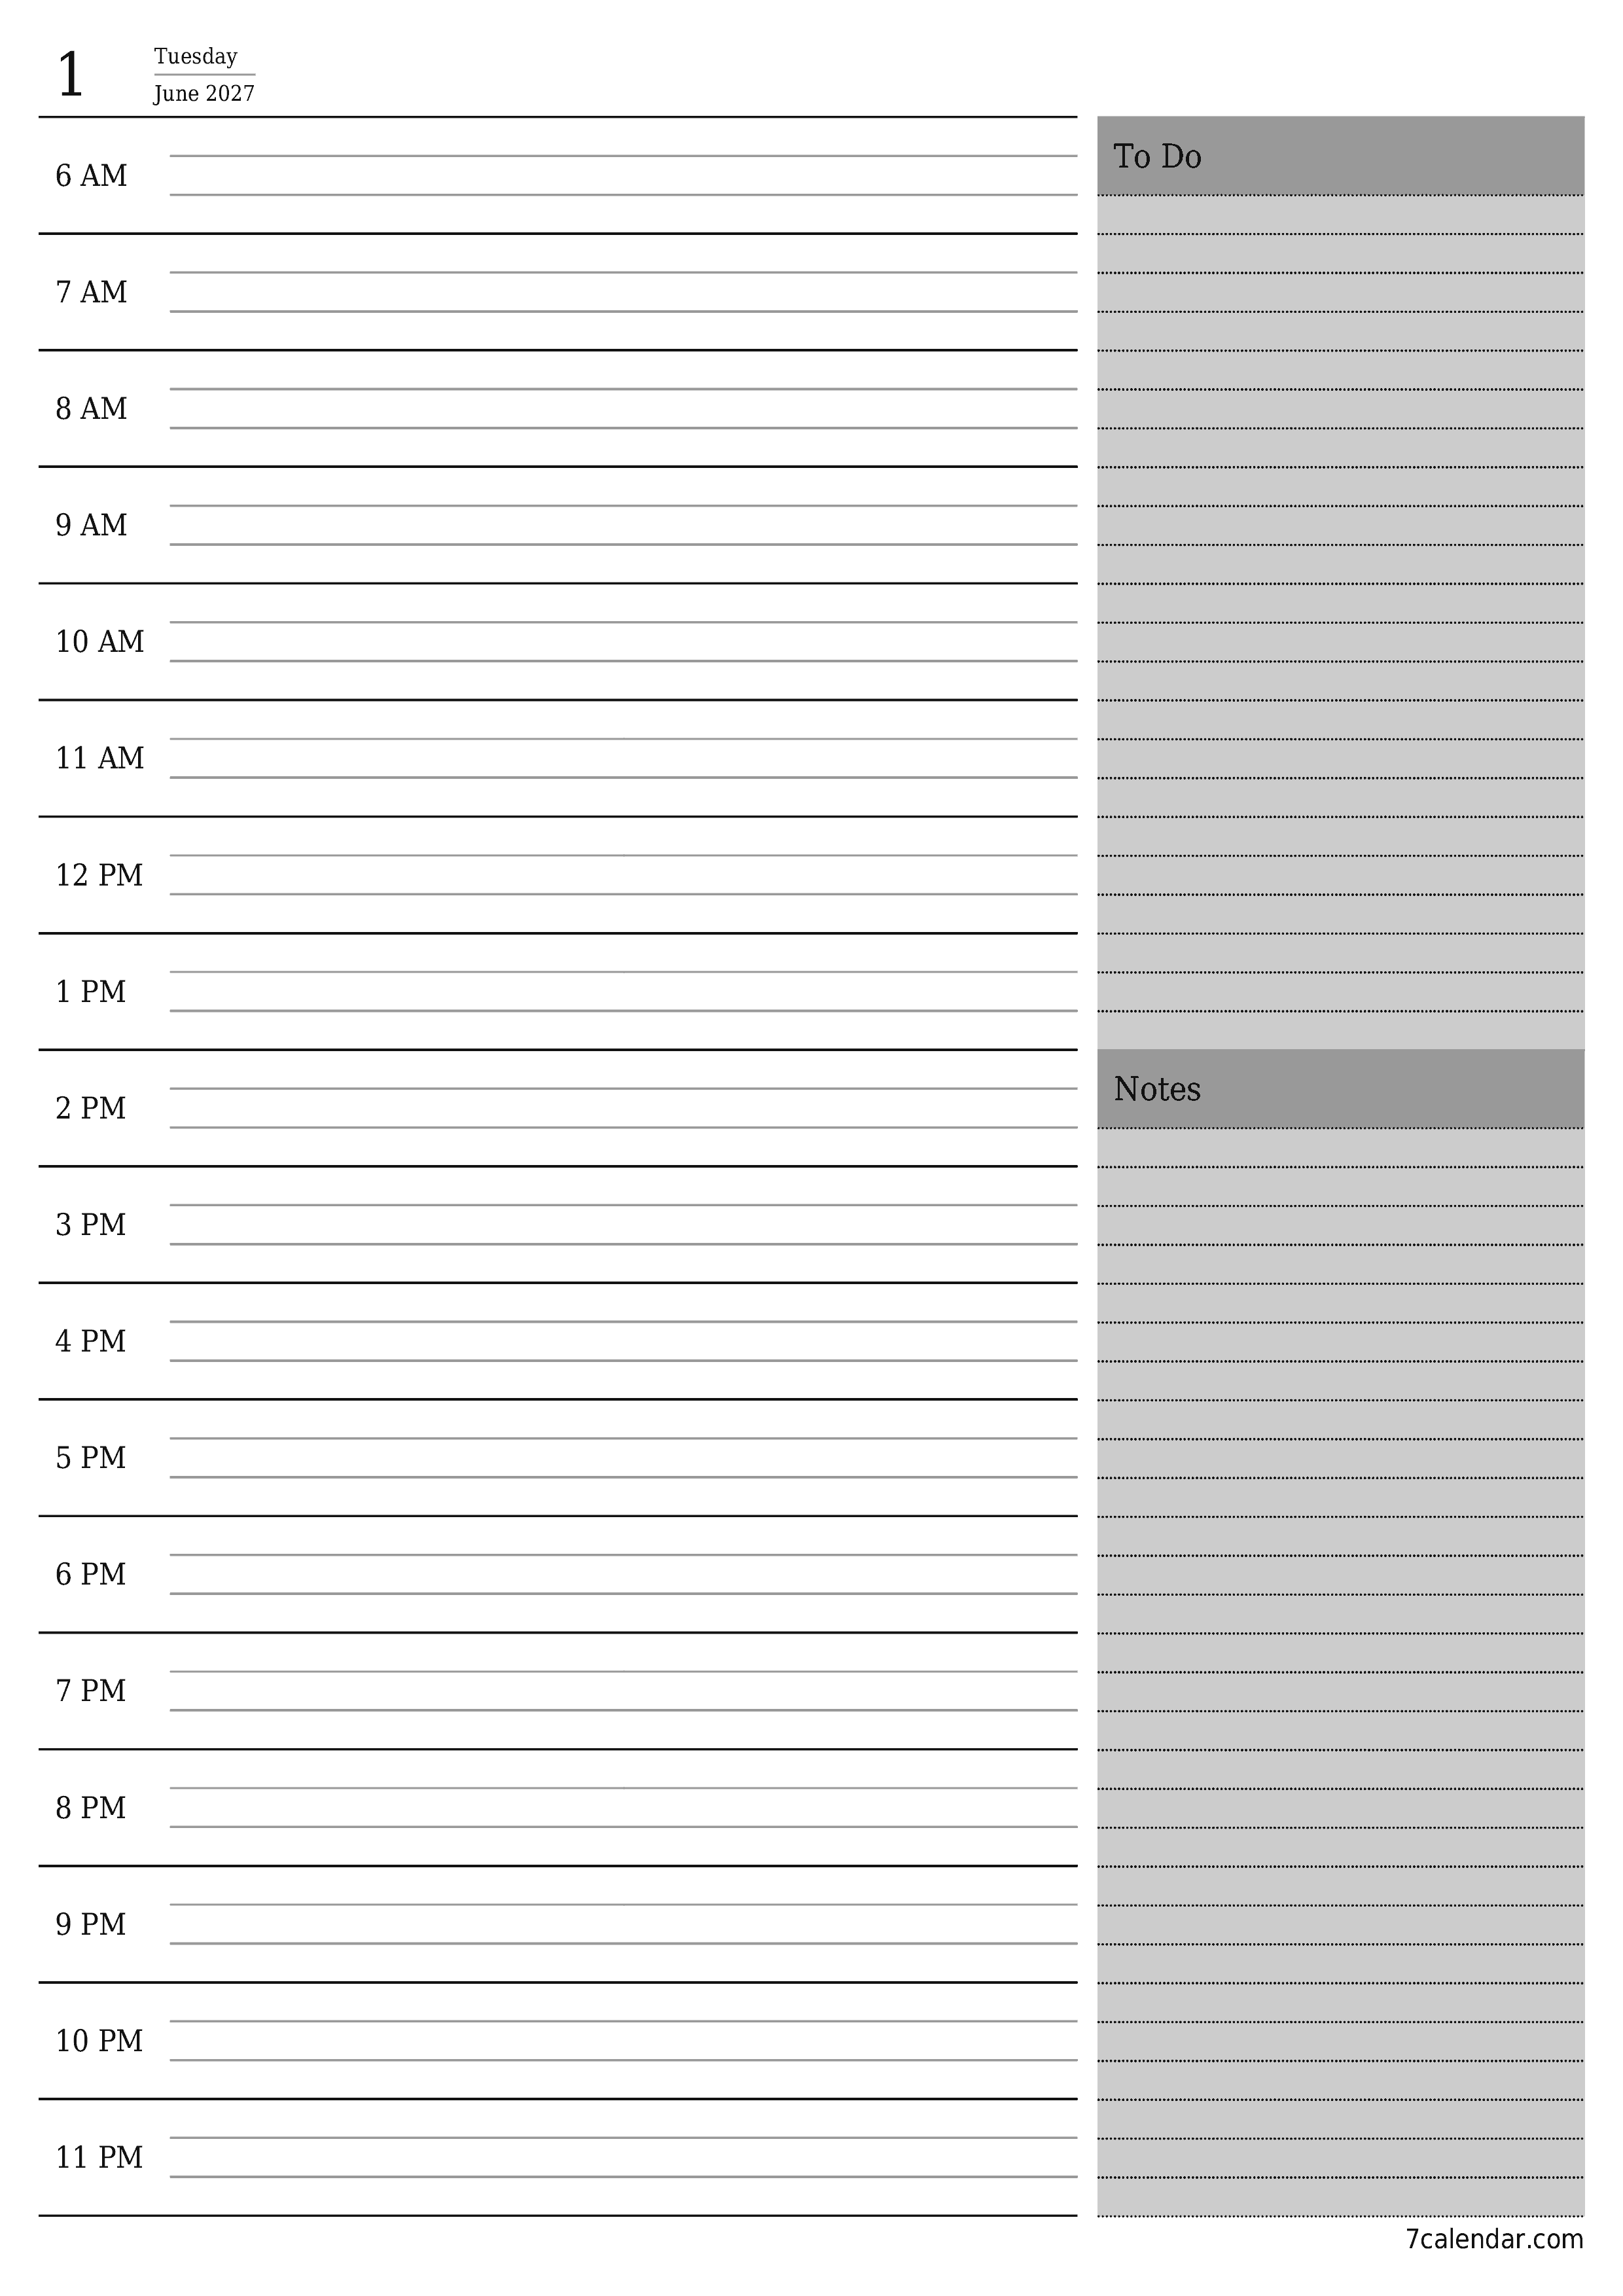 Blank calendar June 2027